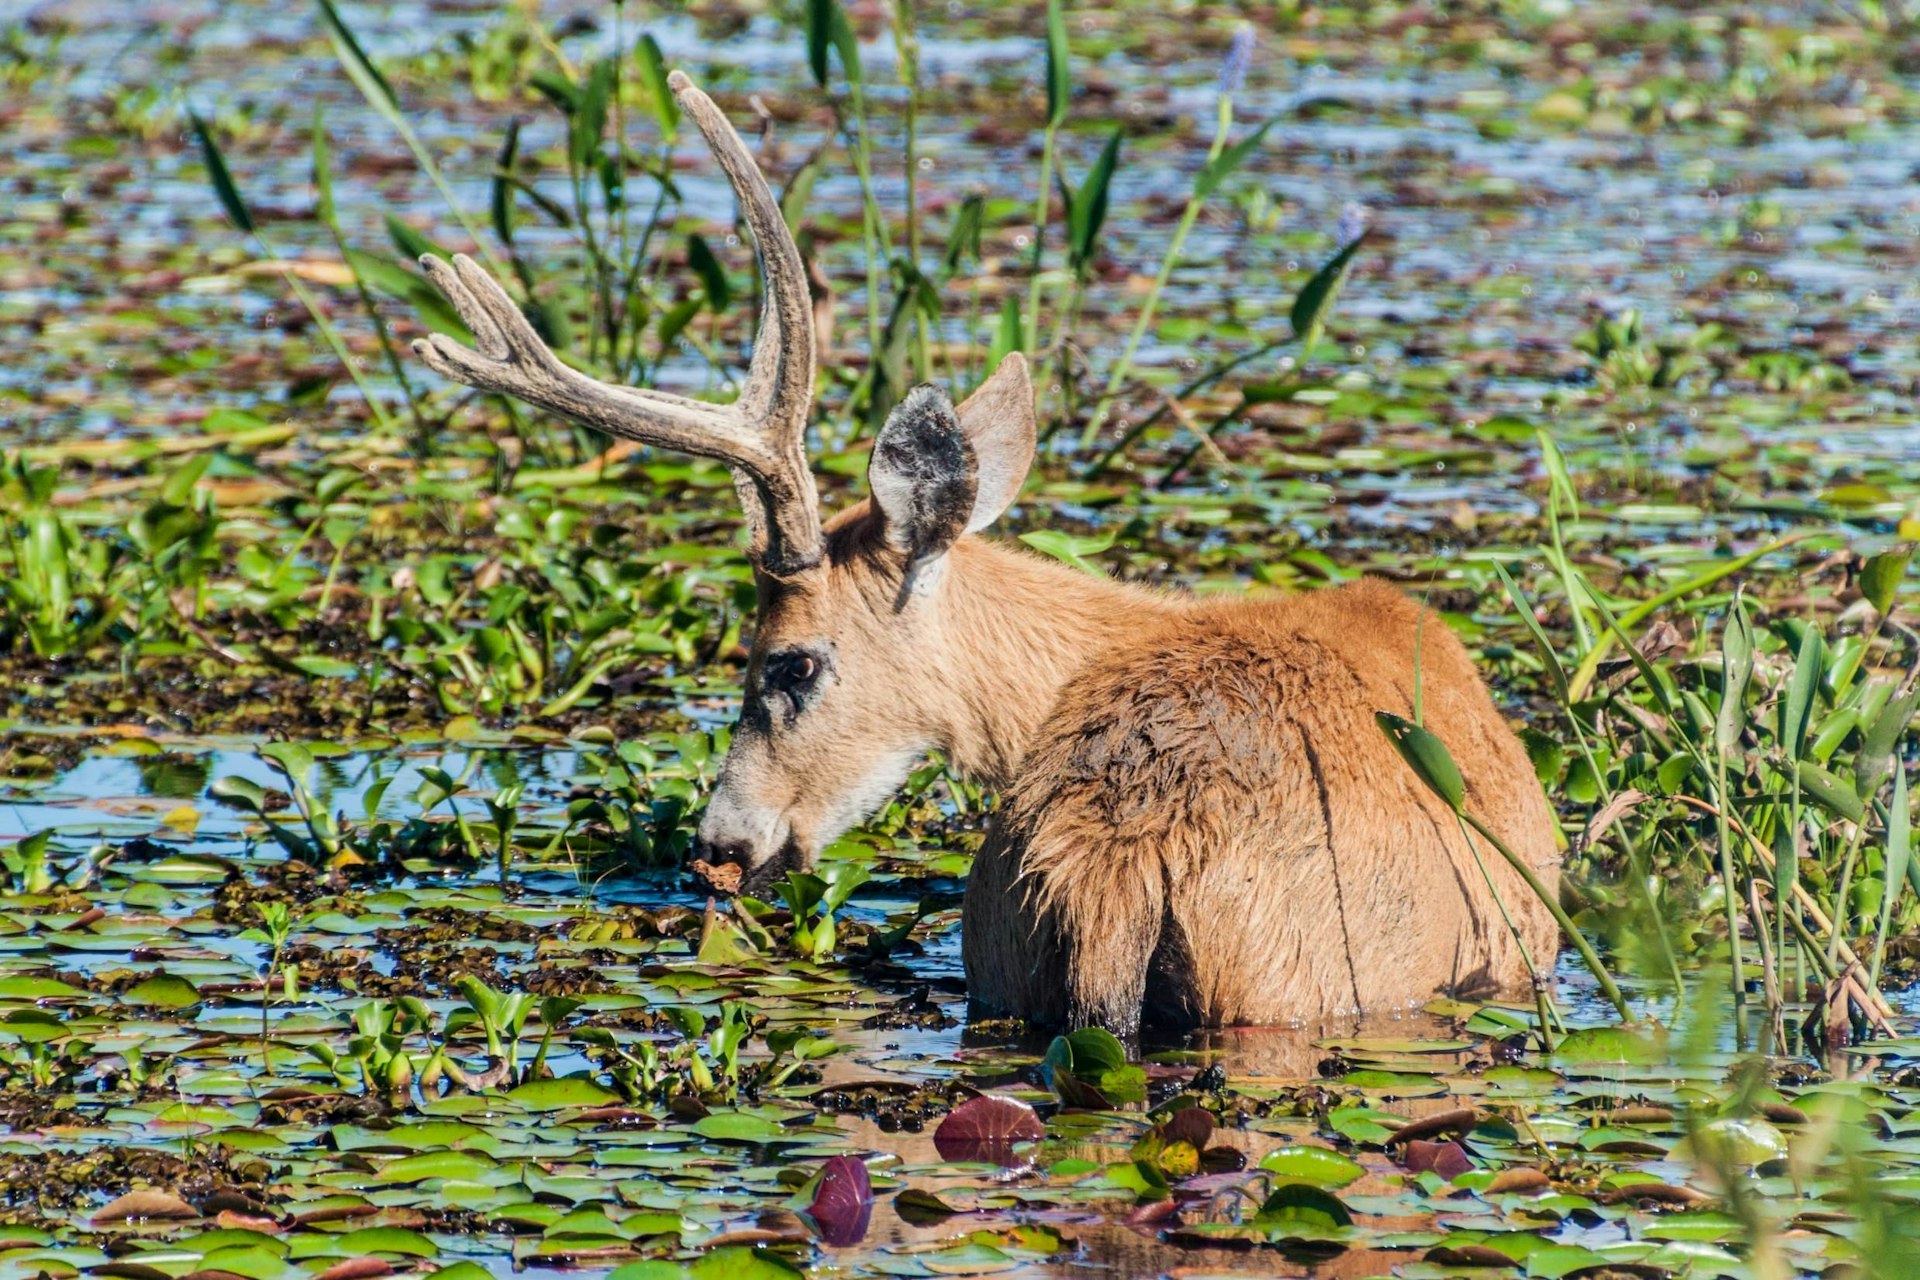 A Marsh Deer (Blastocerus dichotomus) wading in the water in Esteros del Ibera